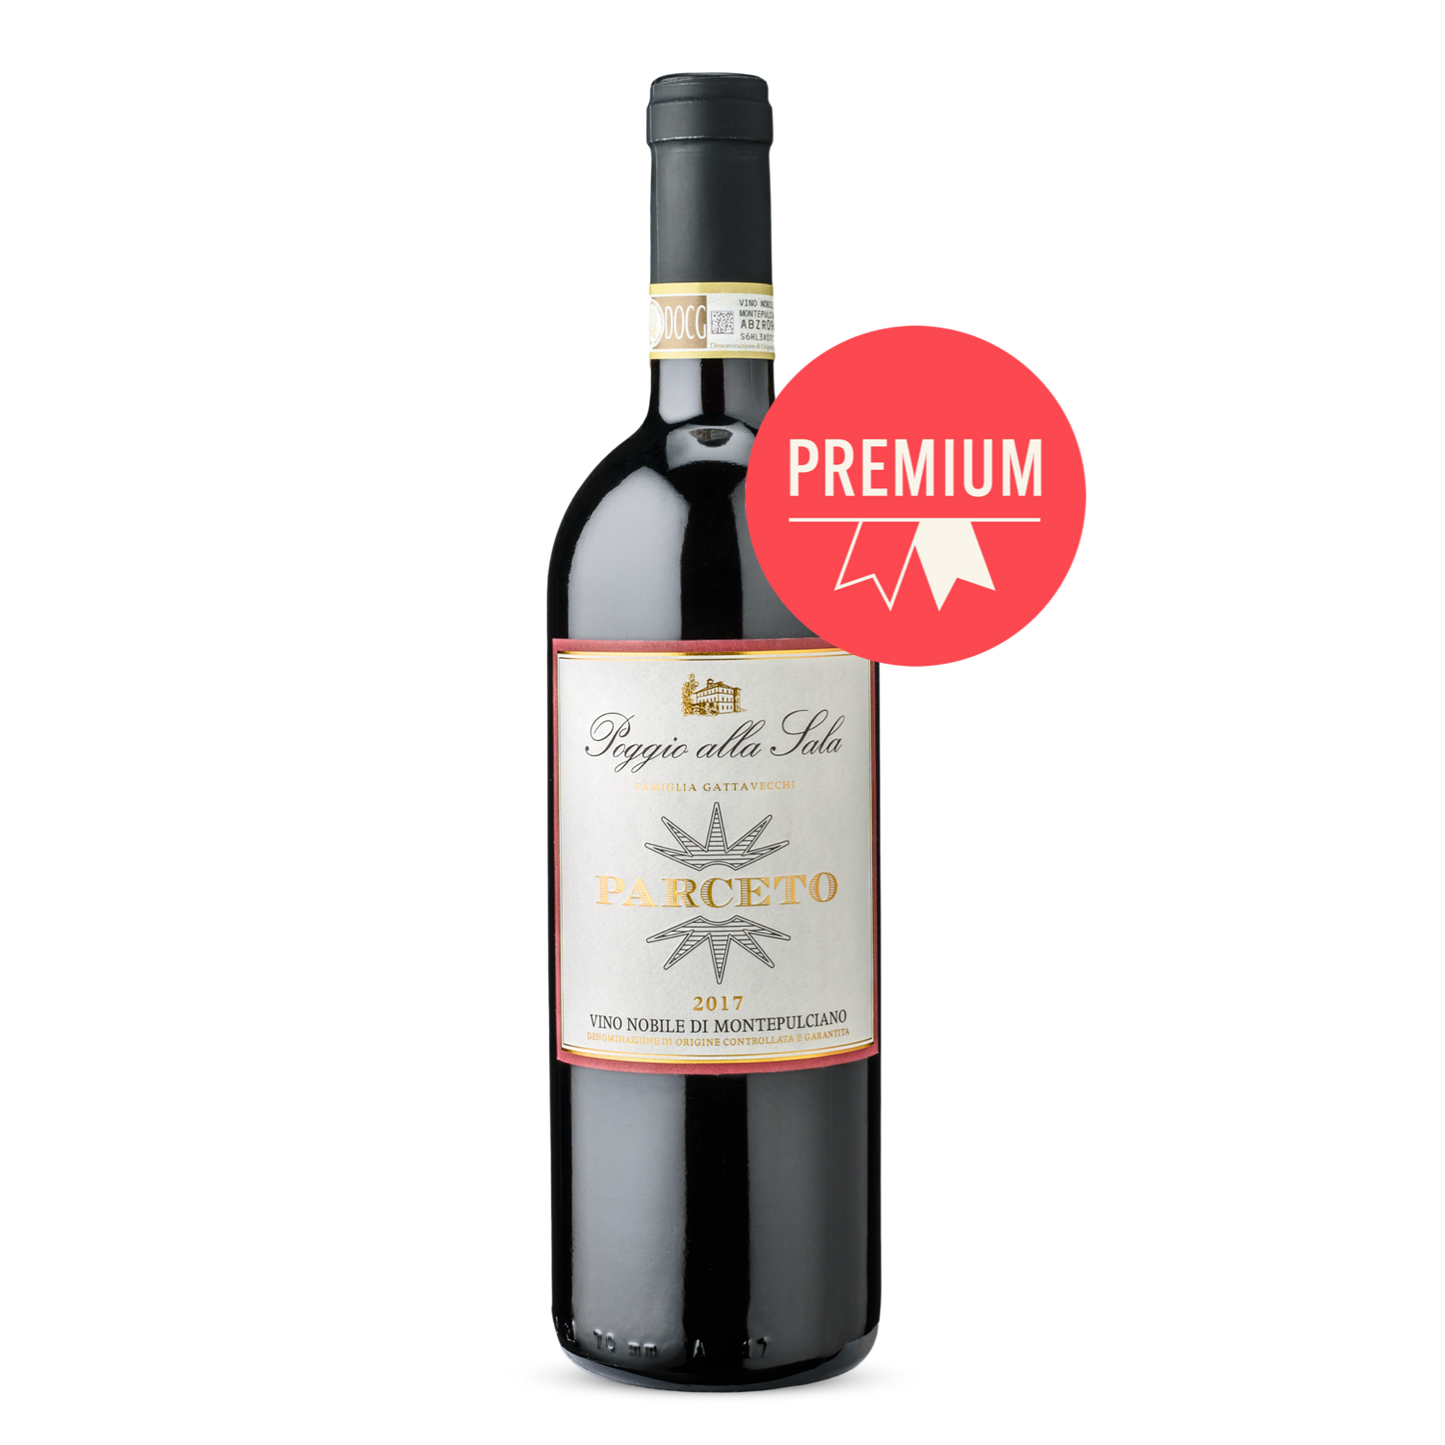 Vino nobile di montepulciano - Parceto 2017 - Premium